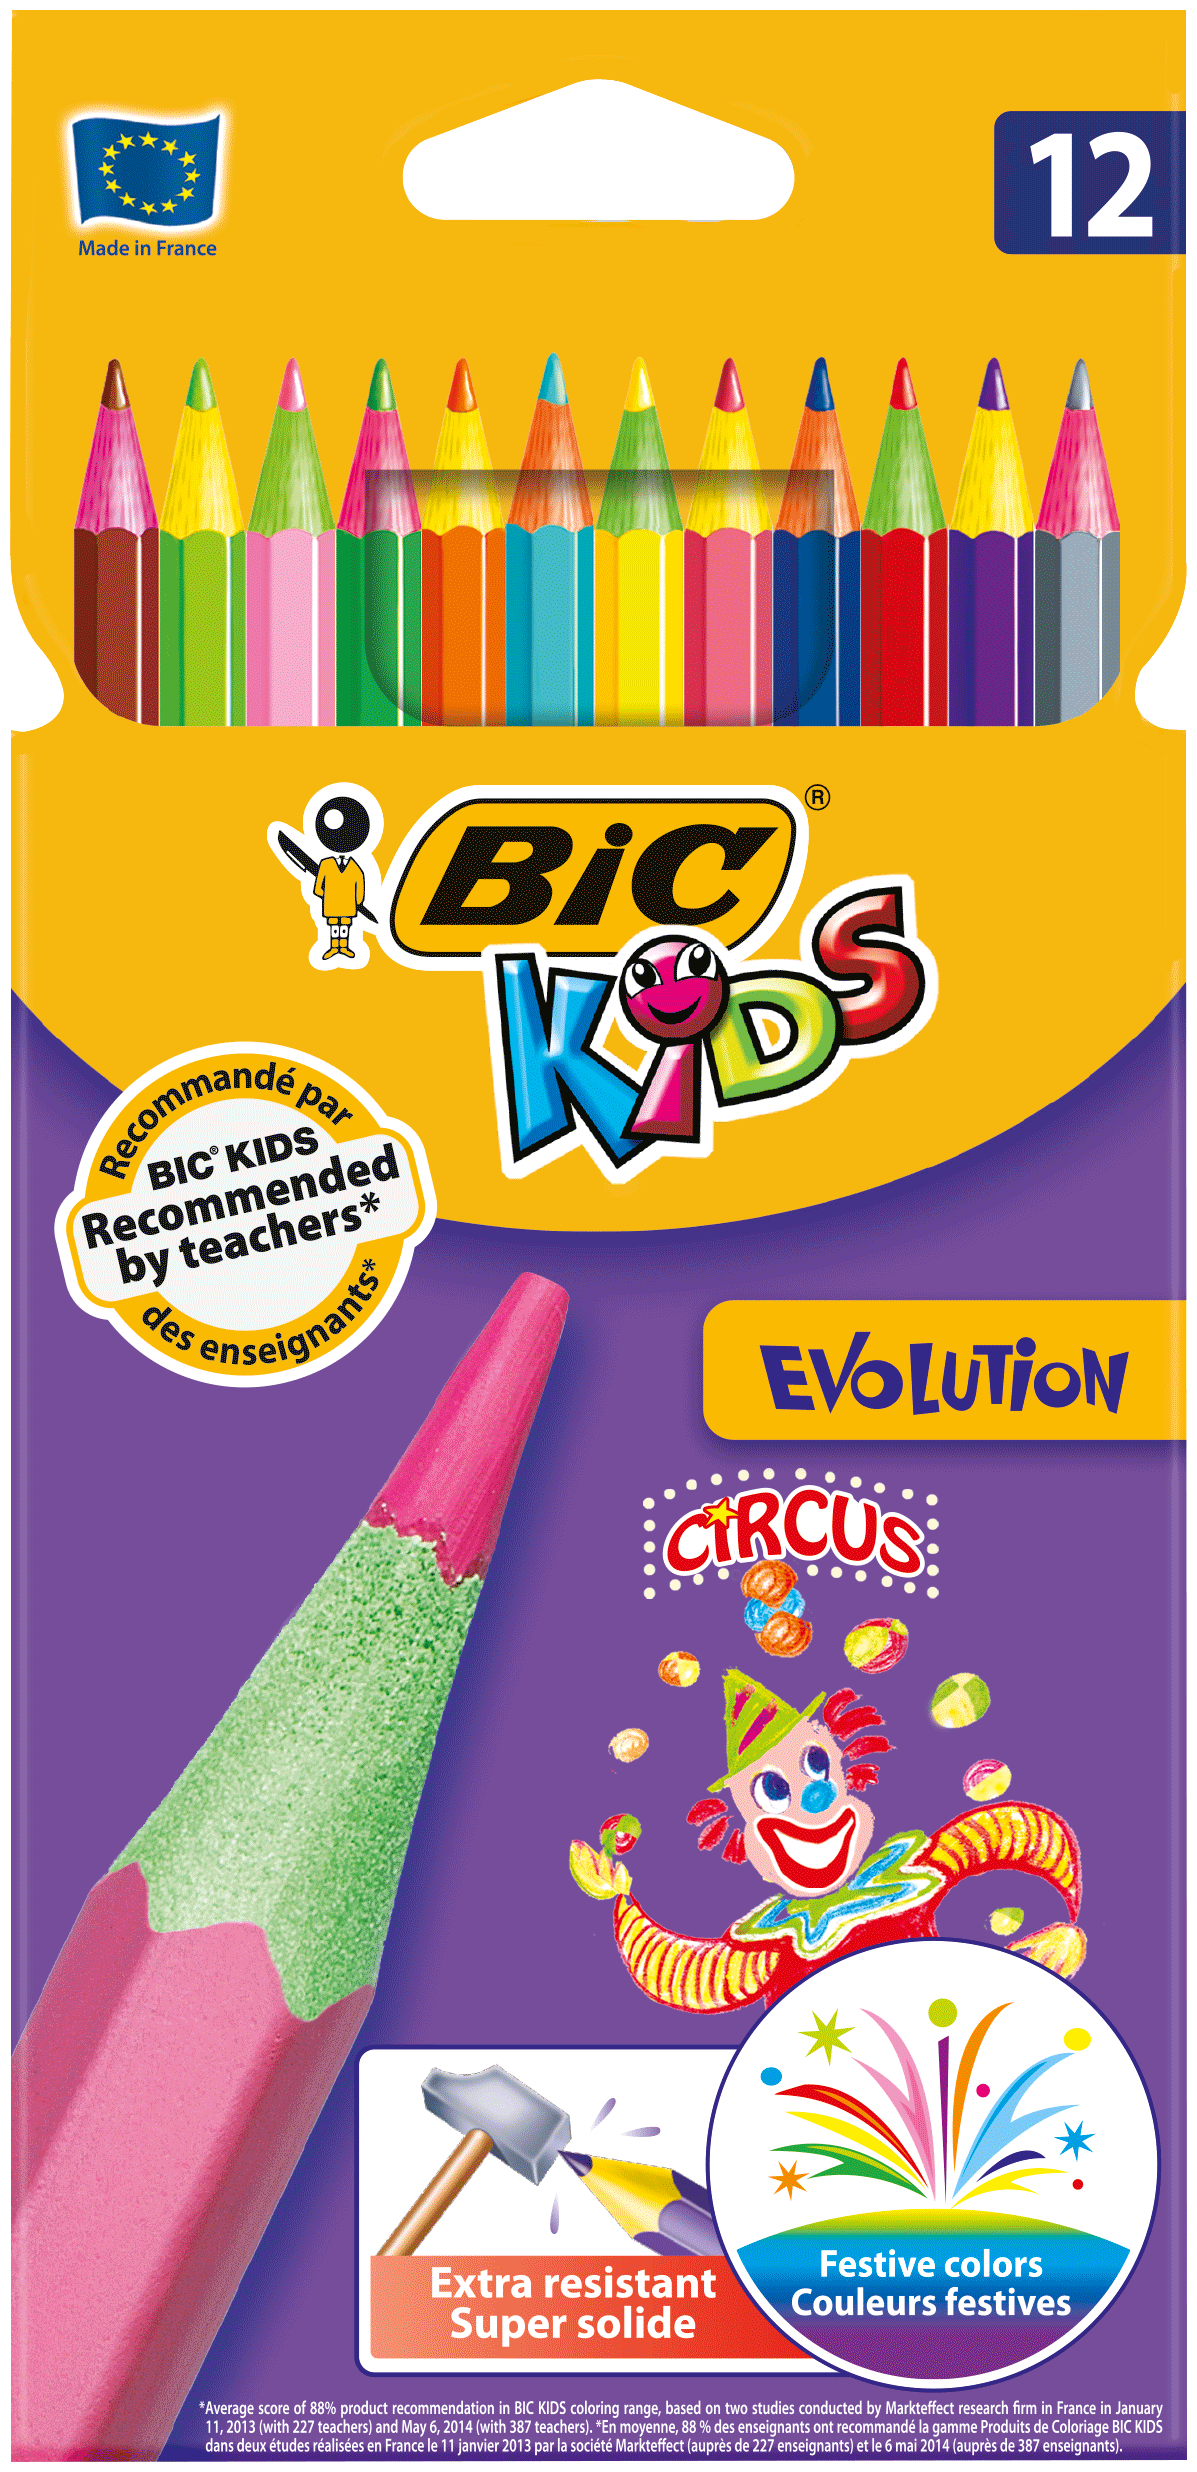 BIC evolution circus